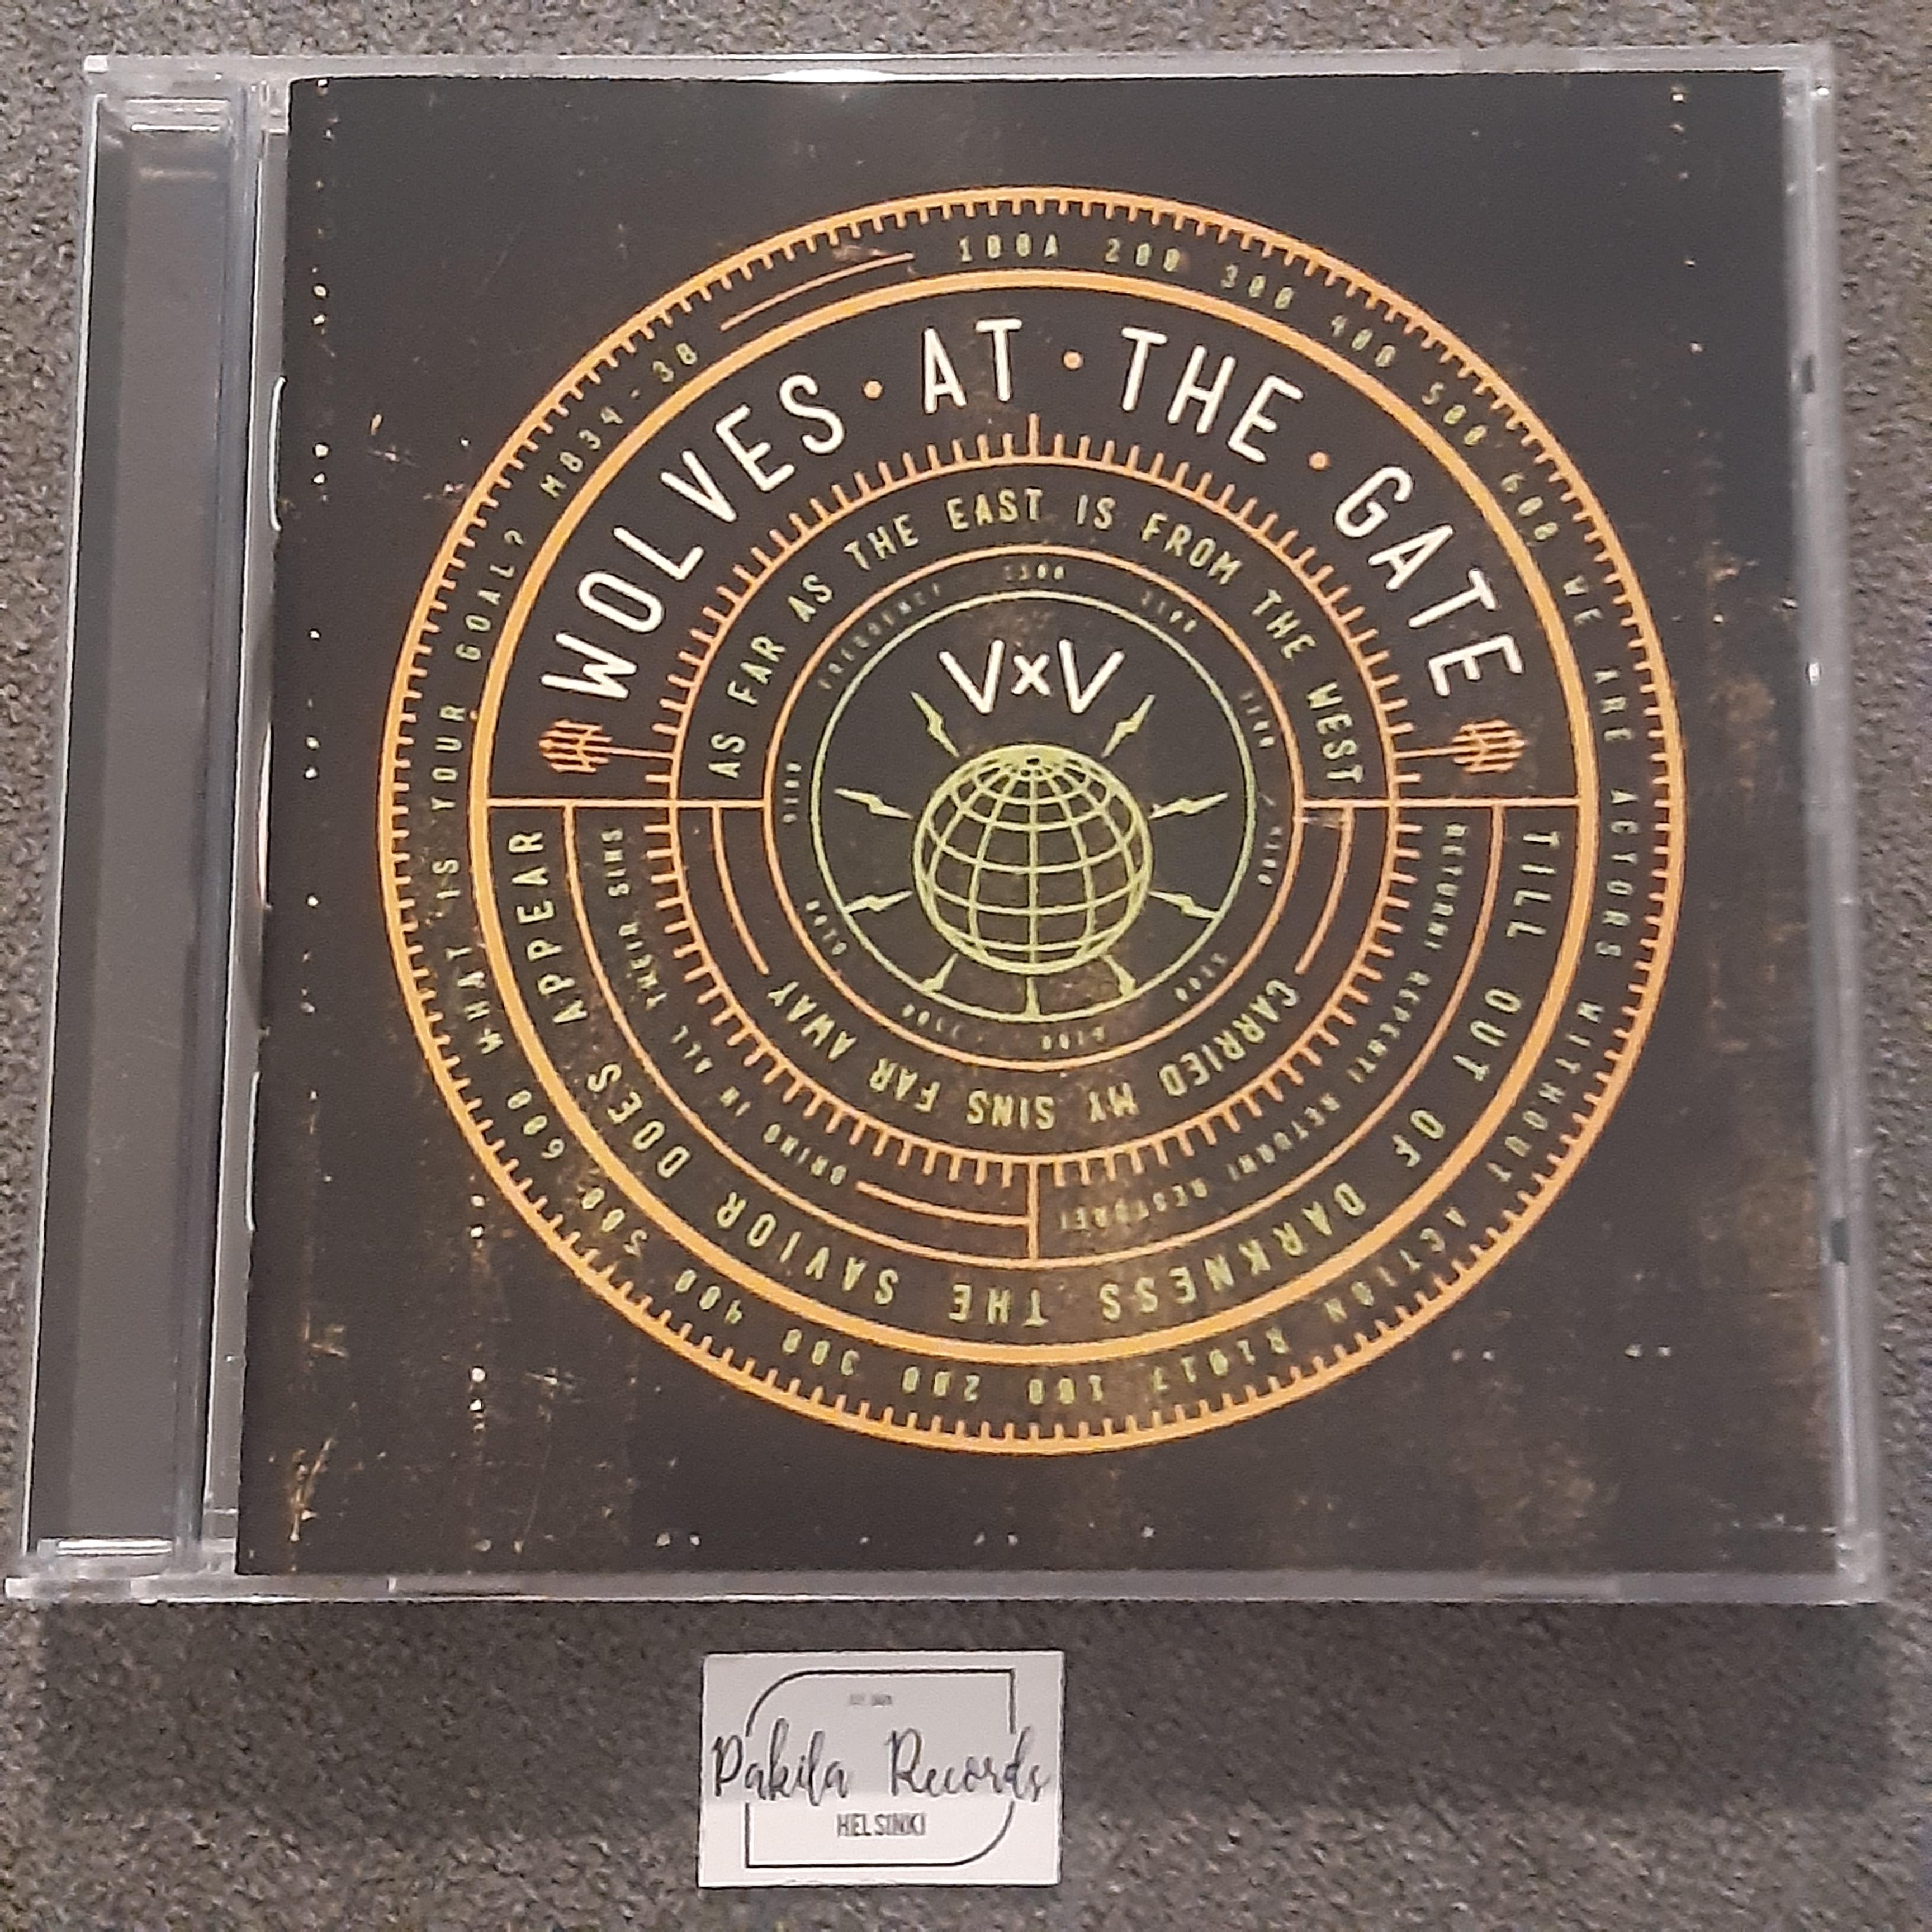 Wolves At The Gate - VxV - CD (käytetty)